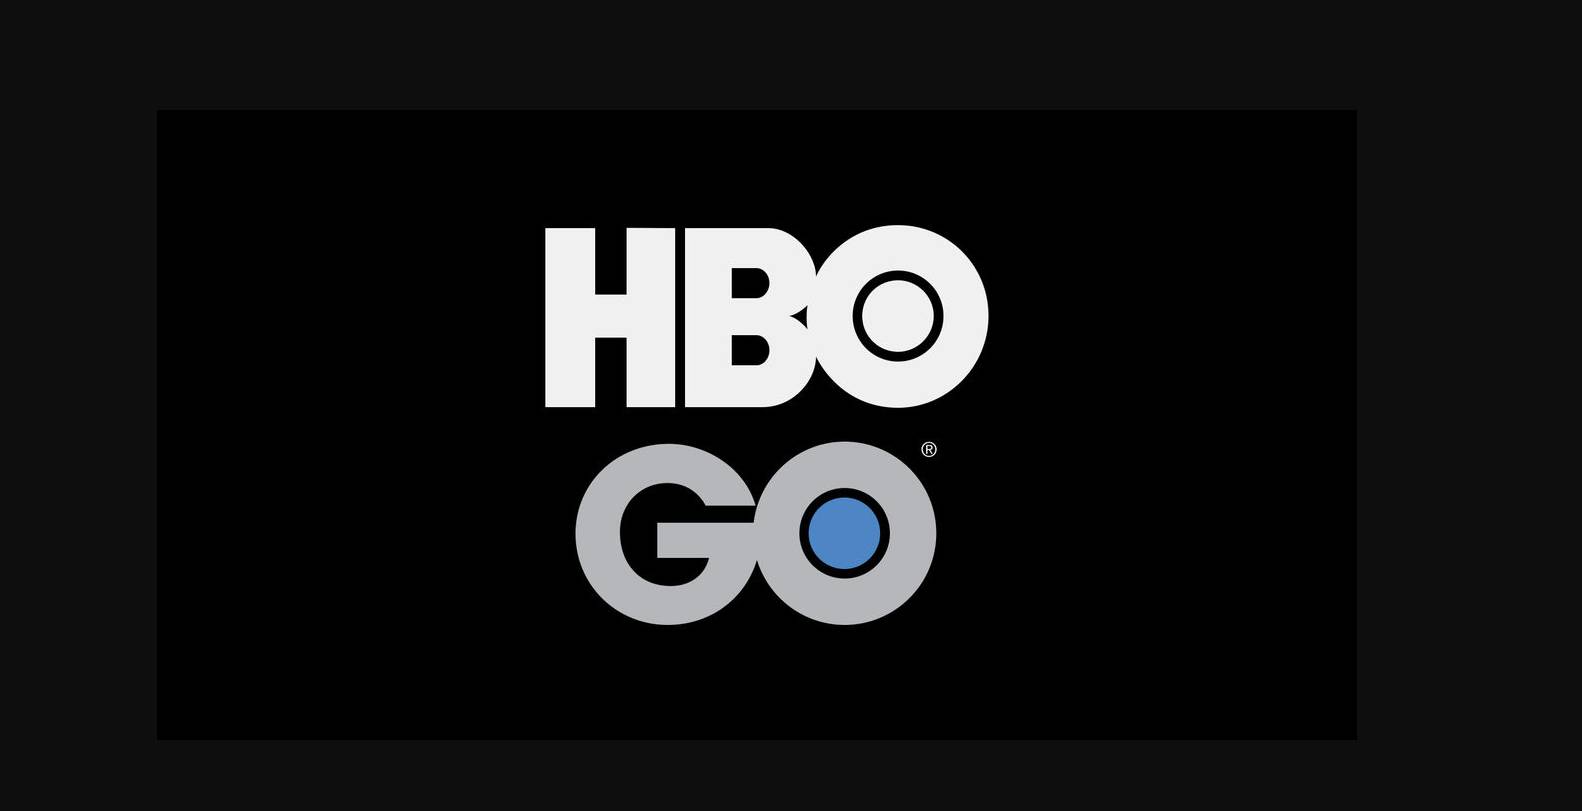 Game of Thrones Season 8 Download Torrent HBO GO